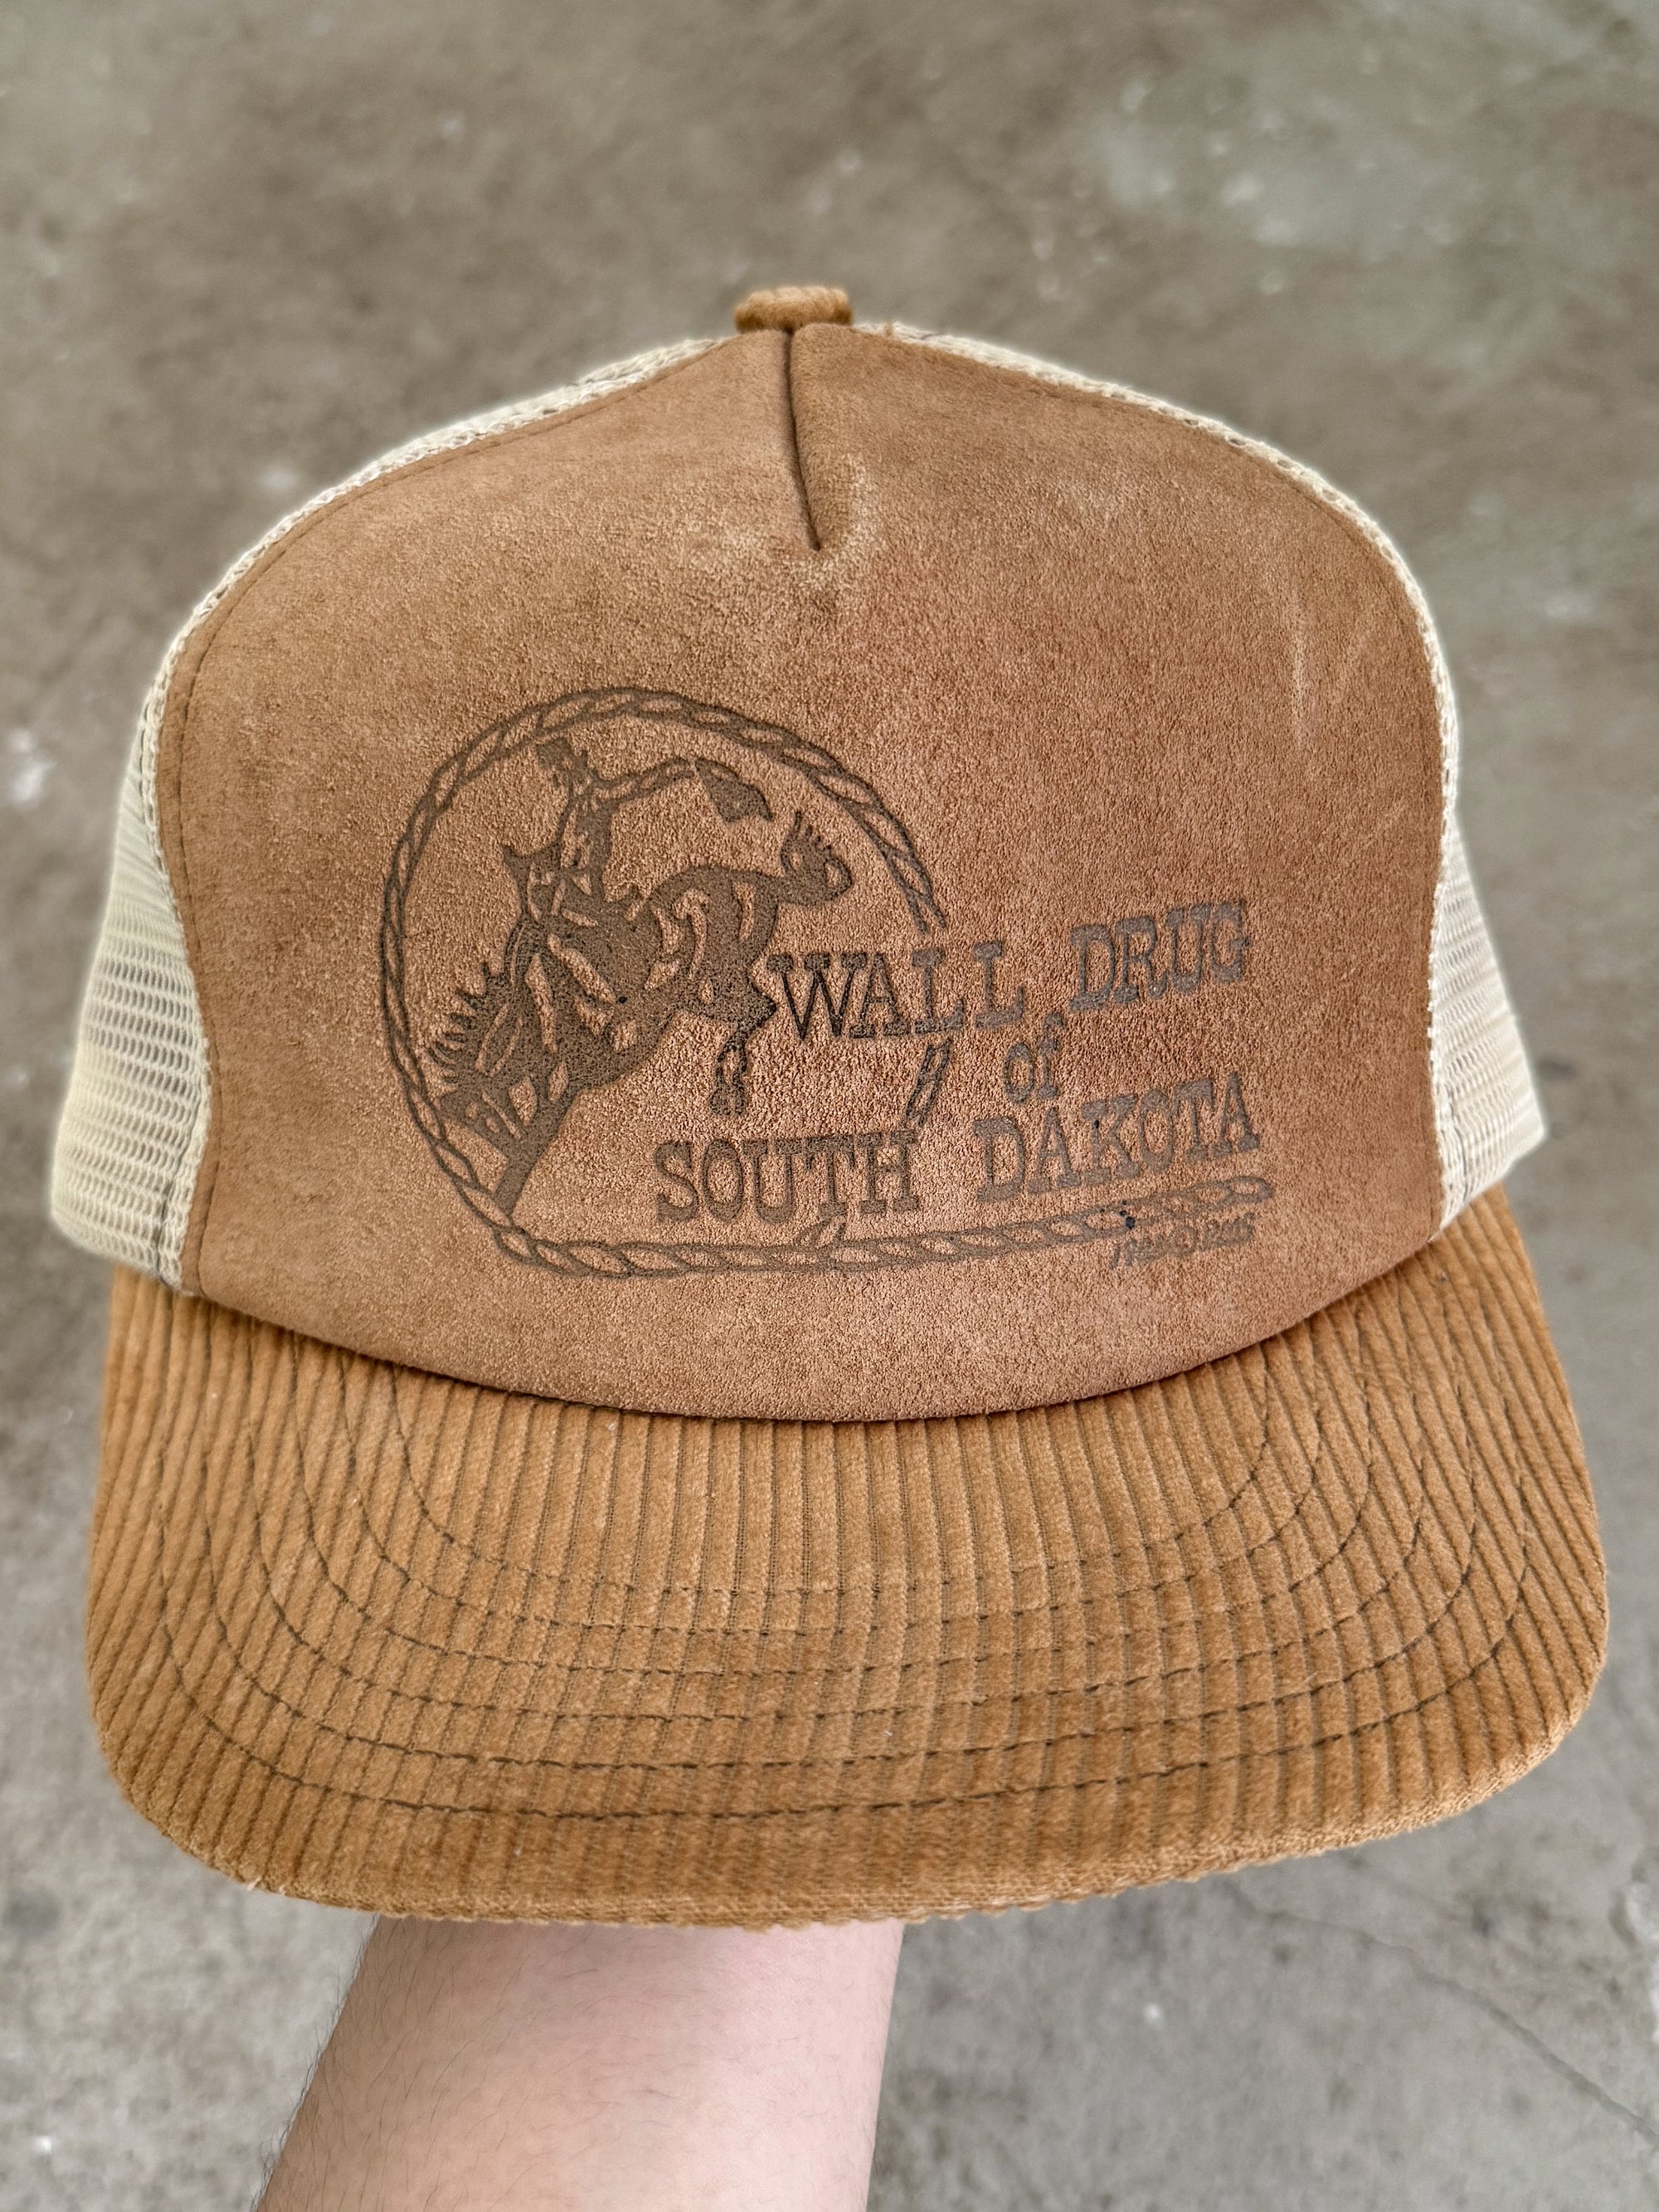 1980s "Wall Drug of South Dakota" Leather Trucker Hat